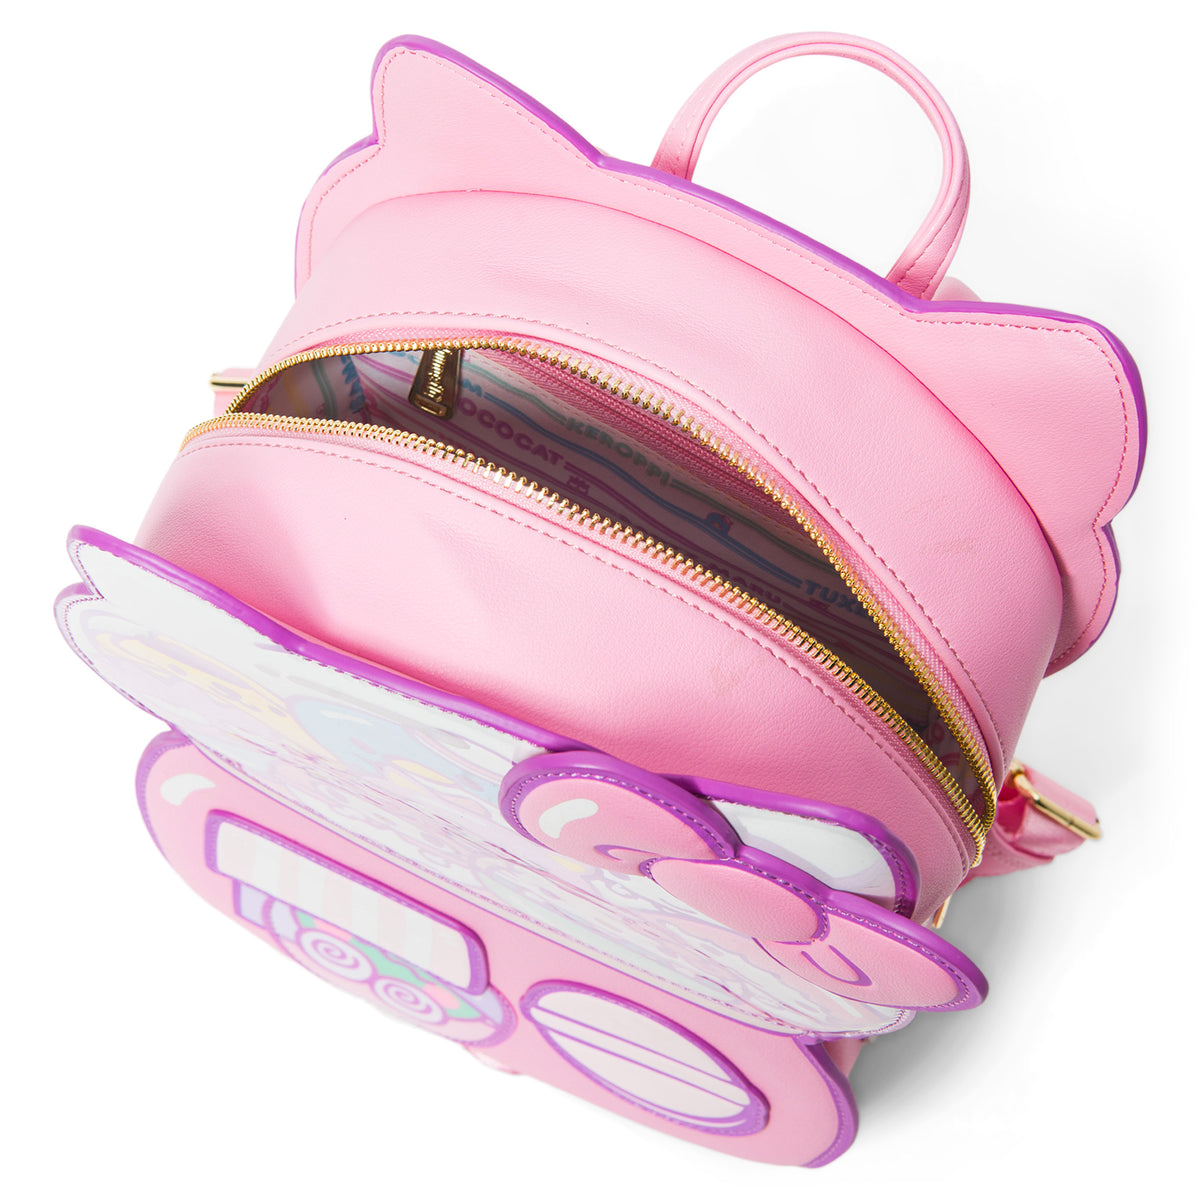 Loungefly Sanrio Hello Kitty Kawaii Machine Figural Mini Backpack